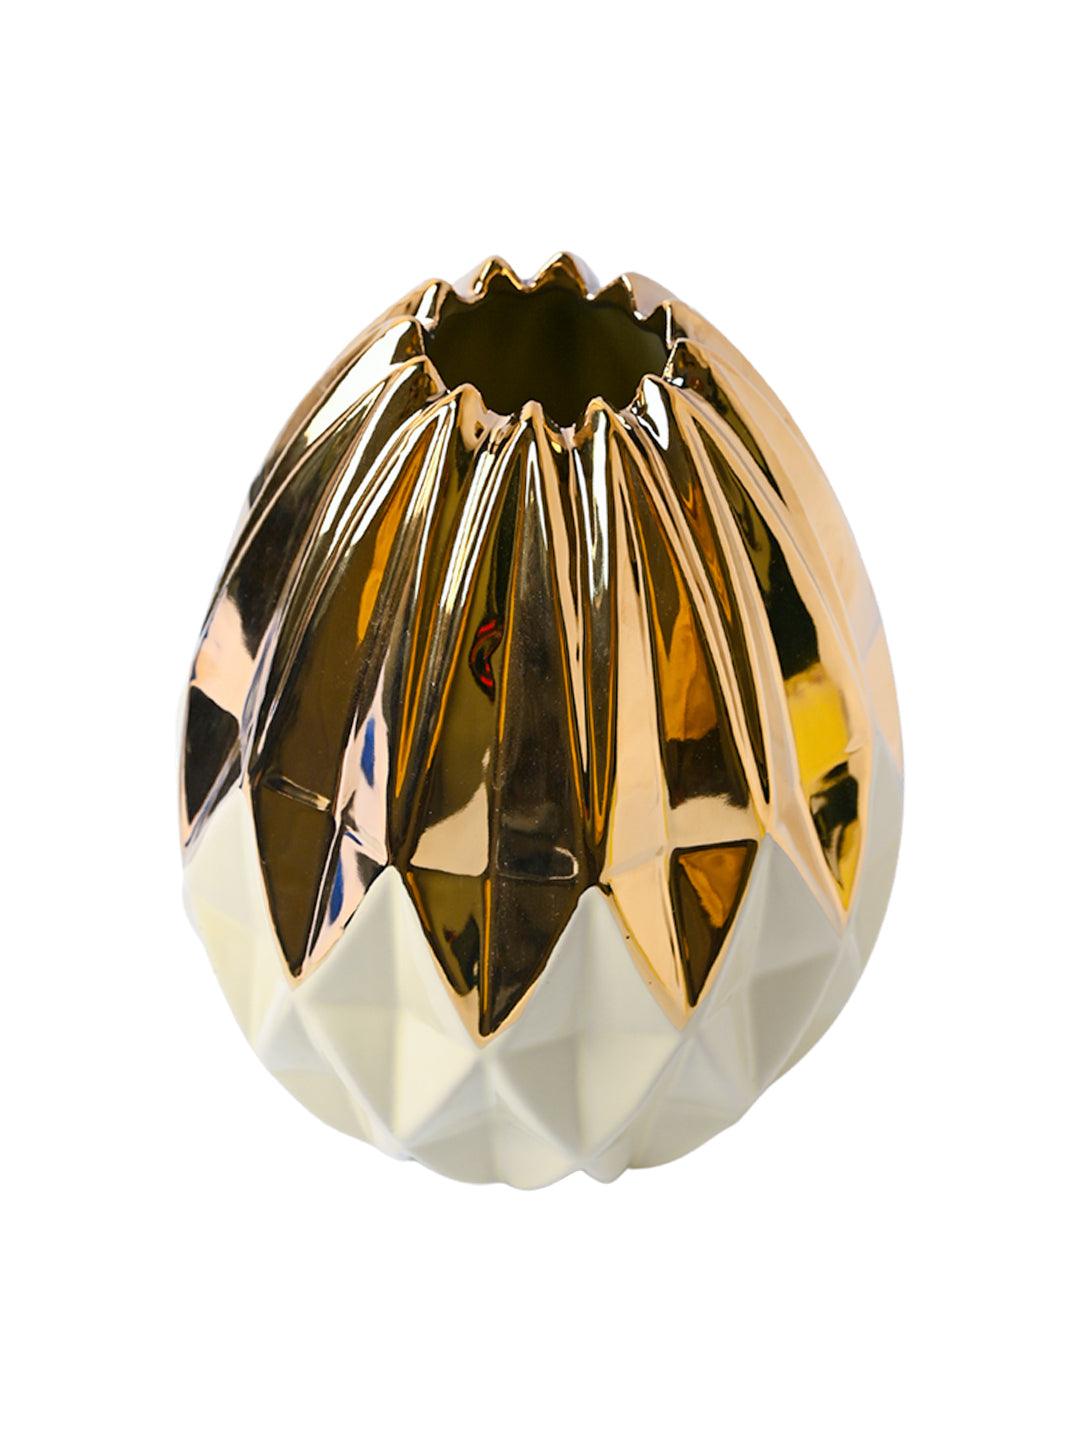 Ivory & Golden Geometric Vase - MARKET99